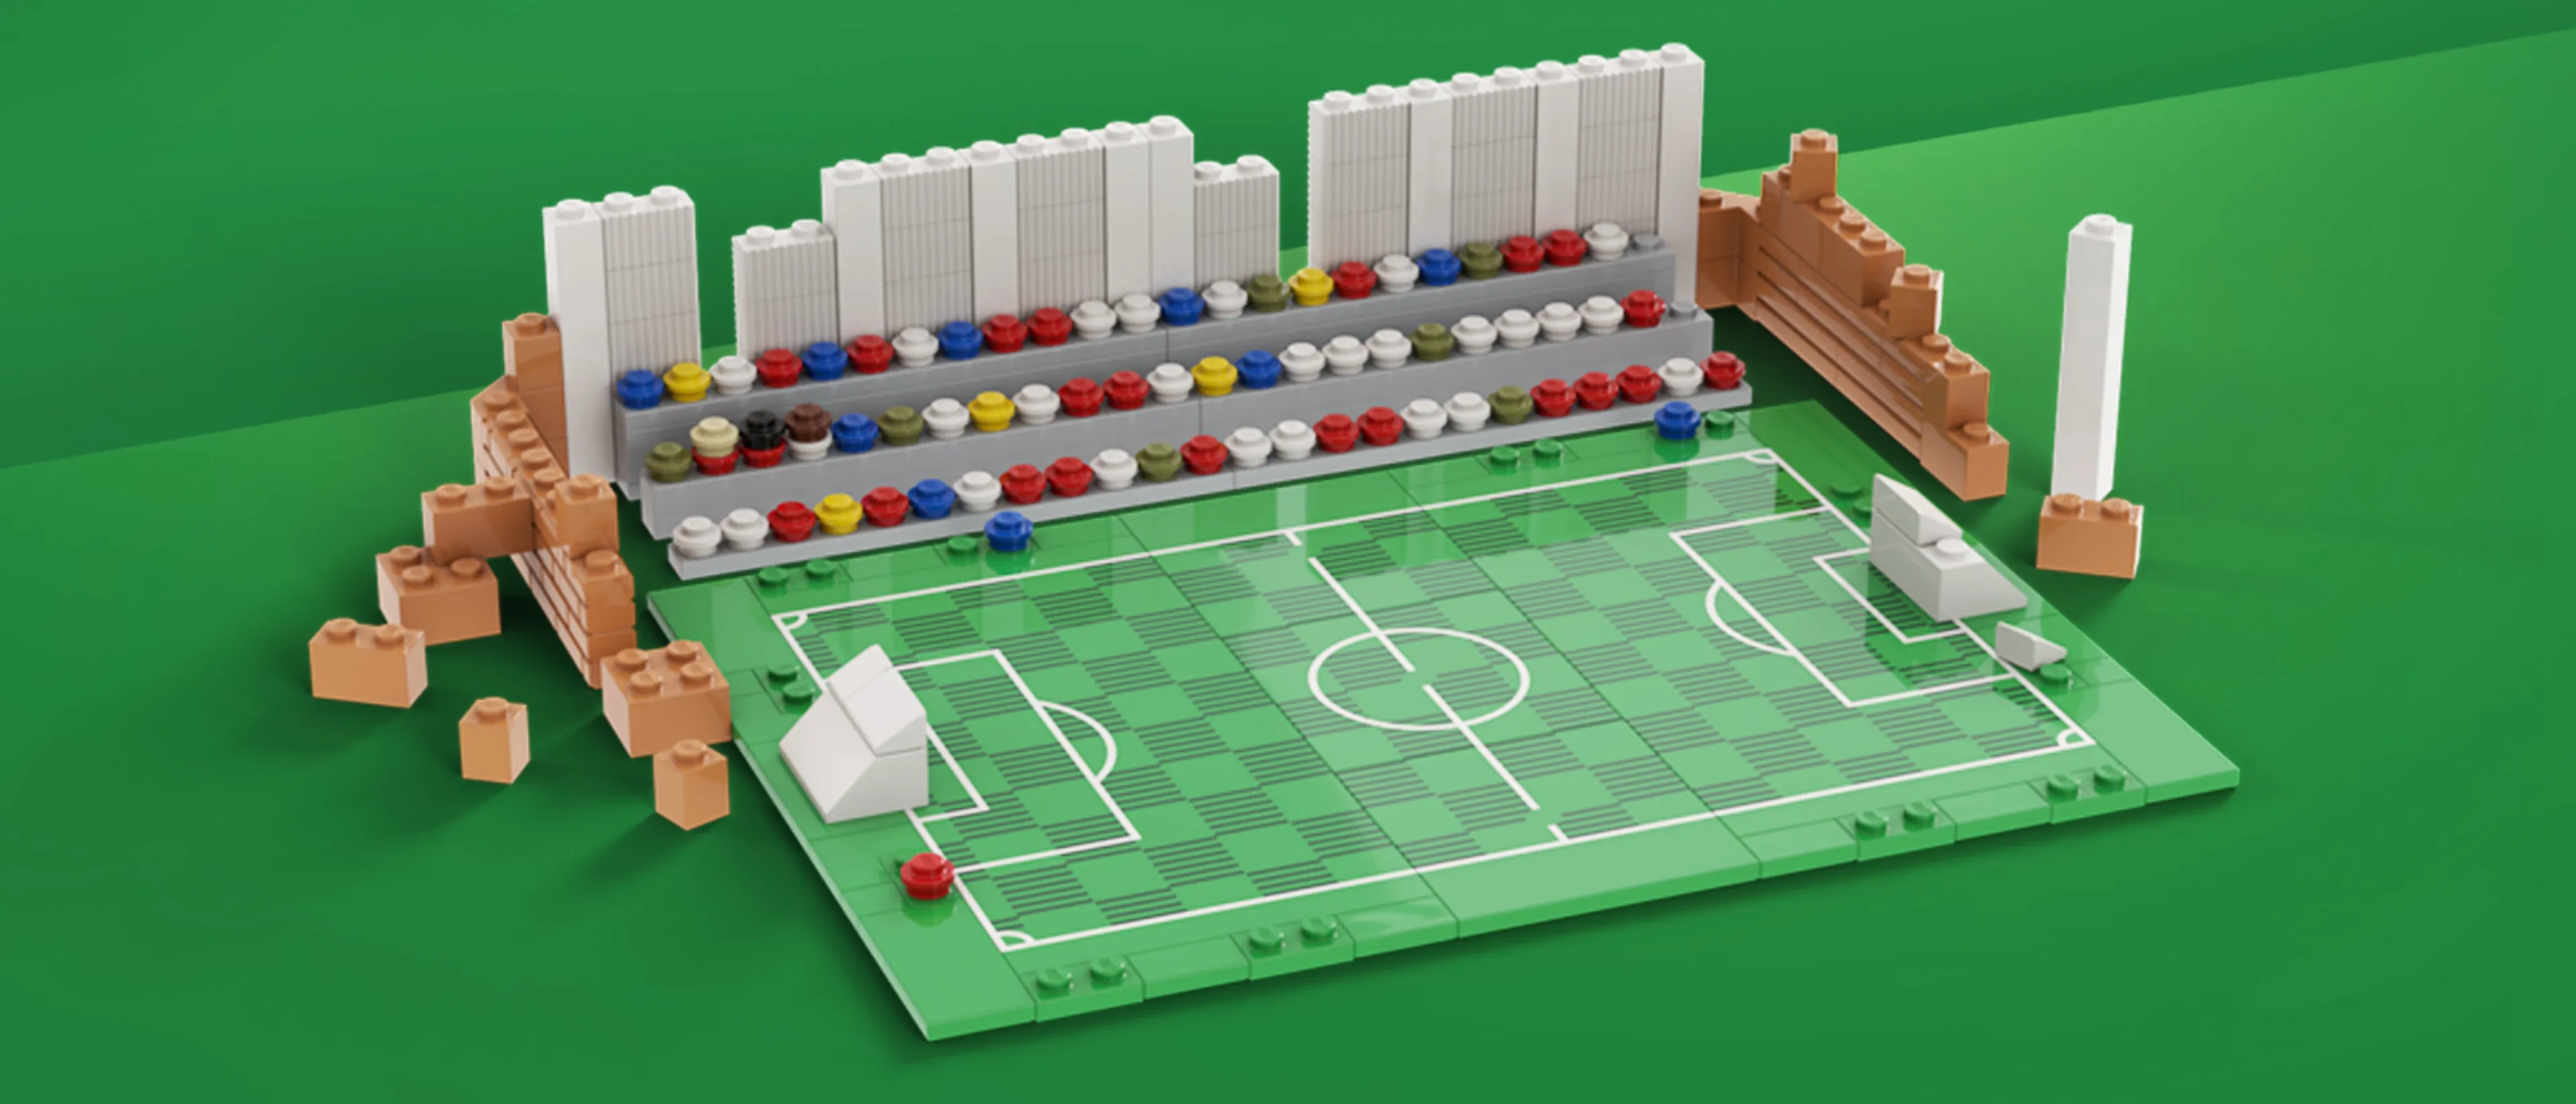 Build your own football stadium